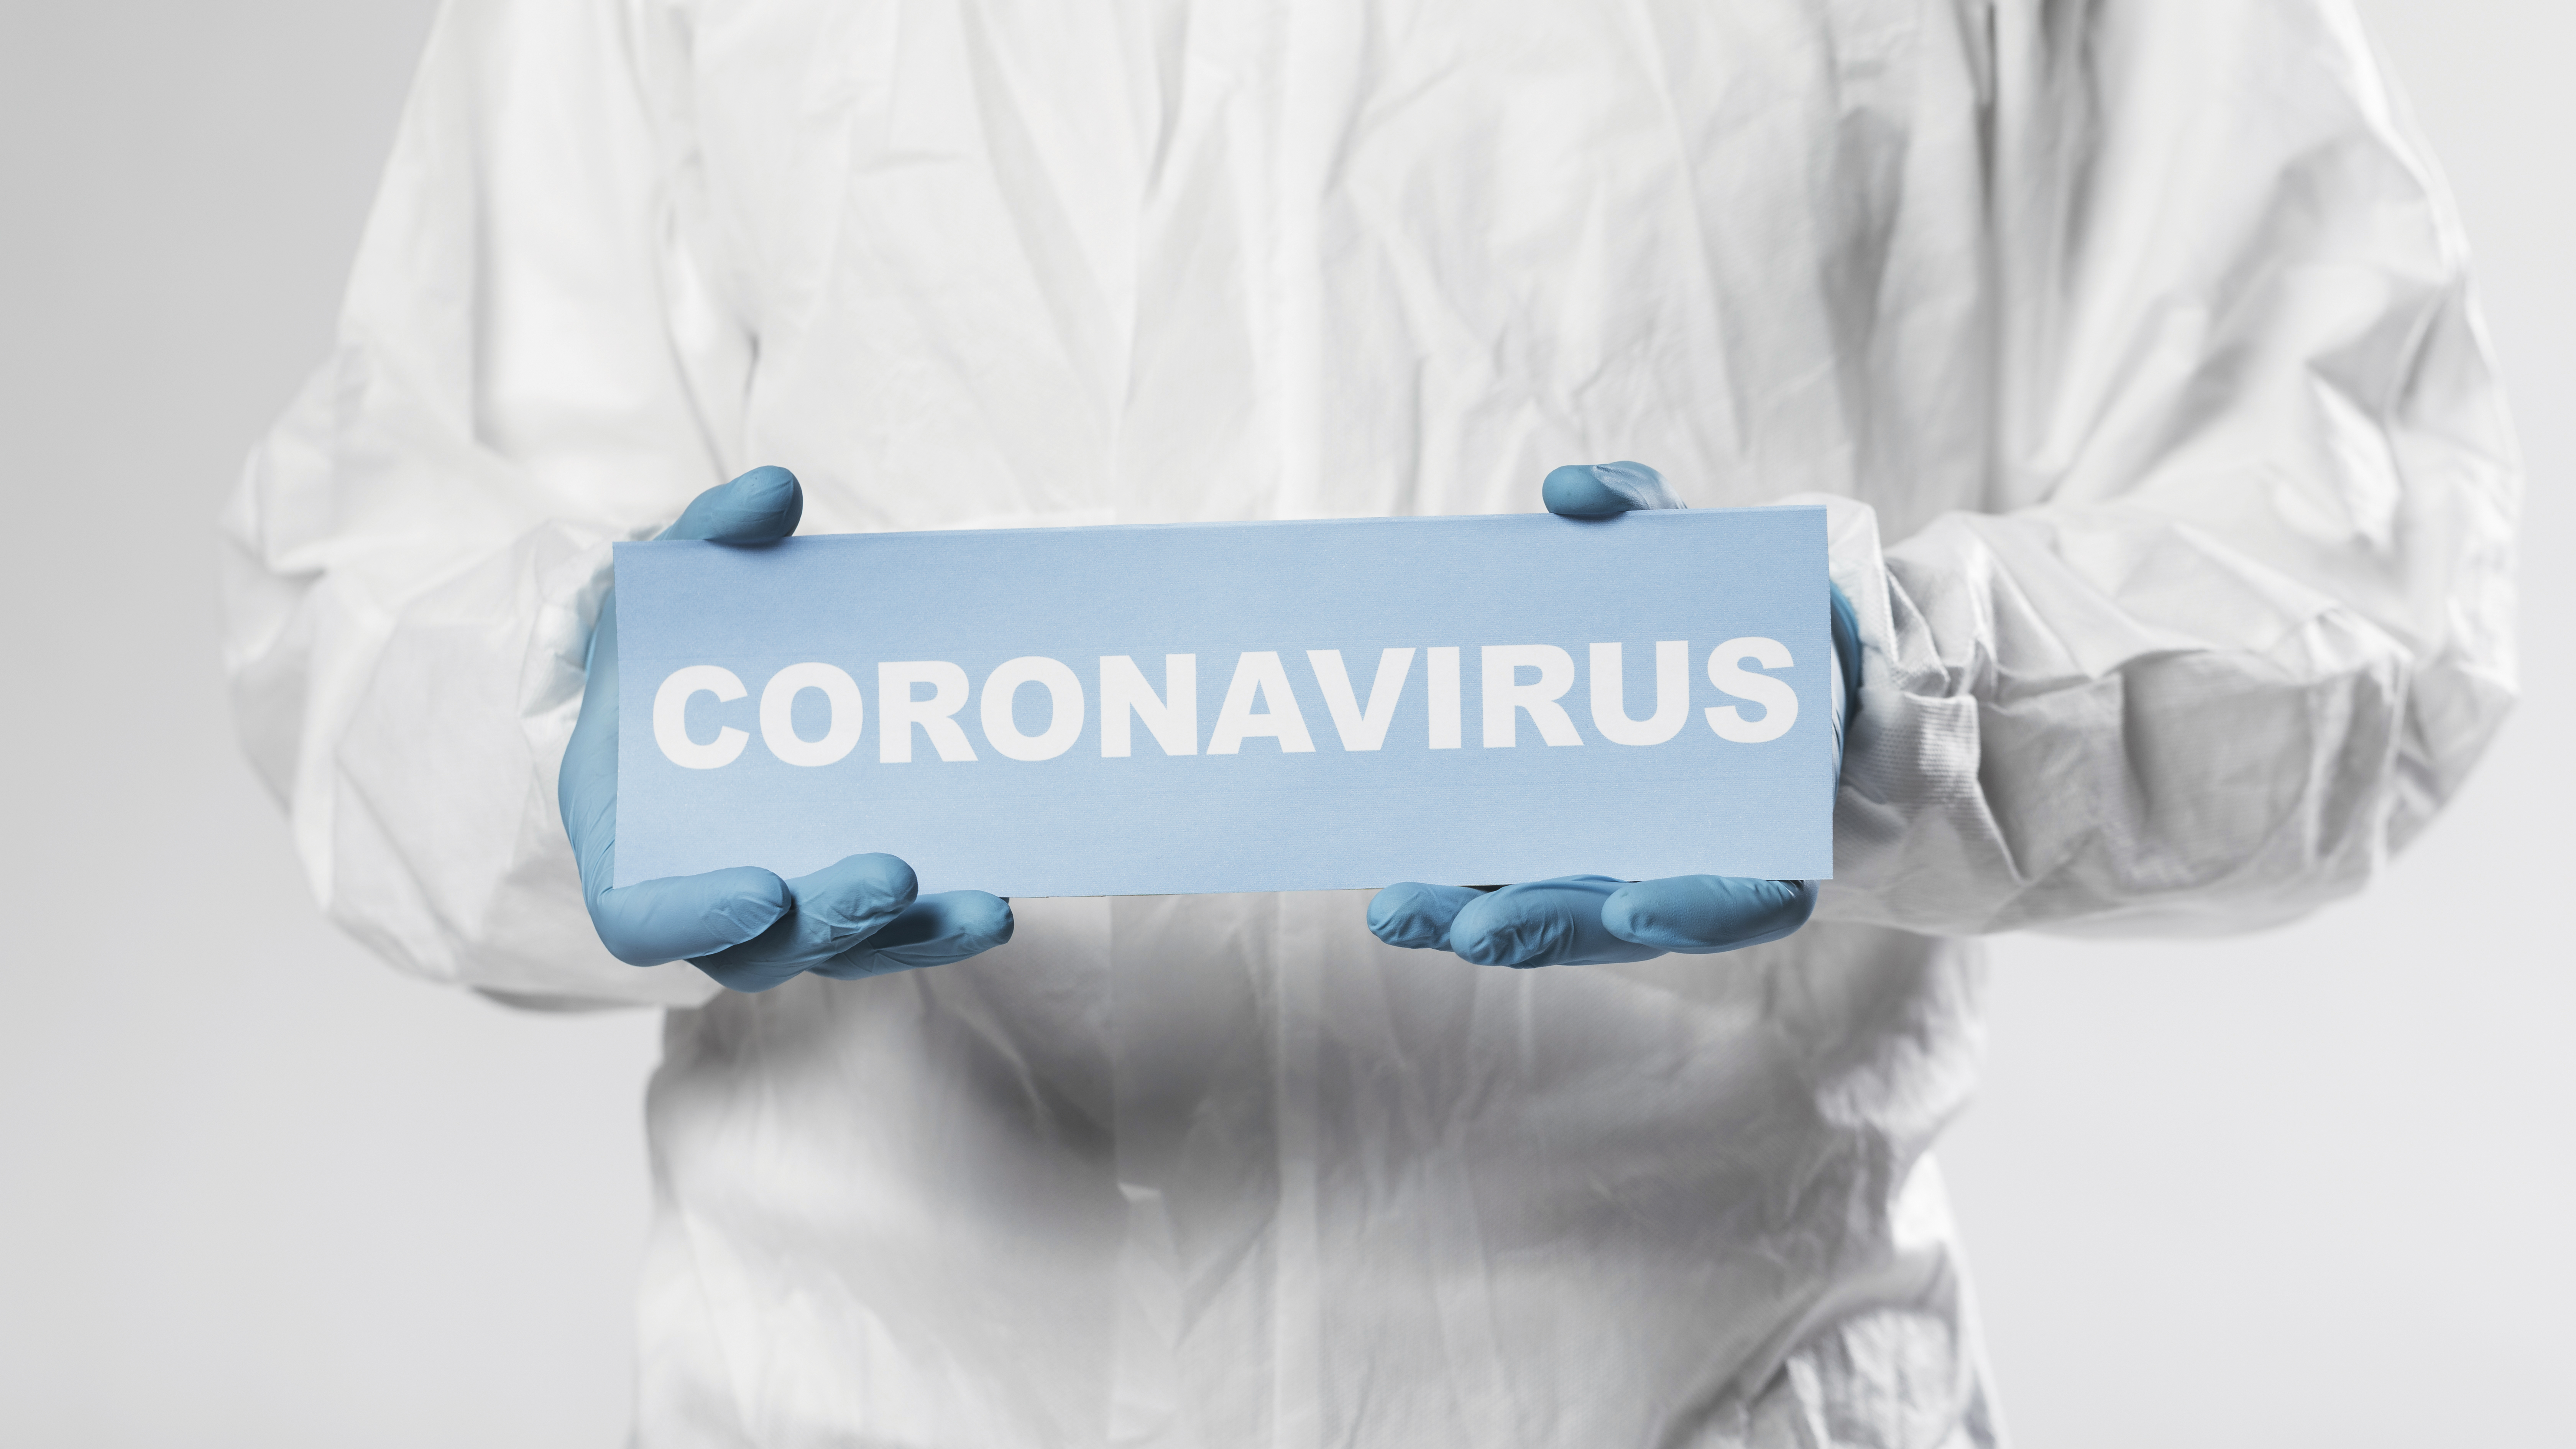 coronavirus comércio exterior